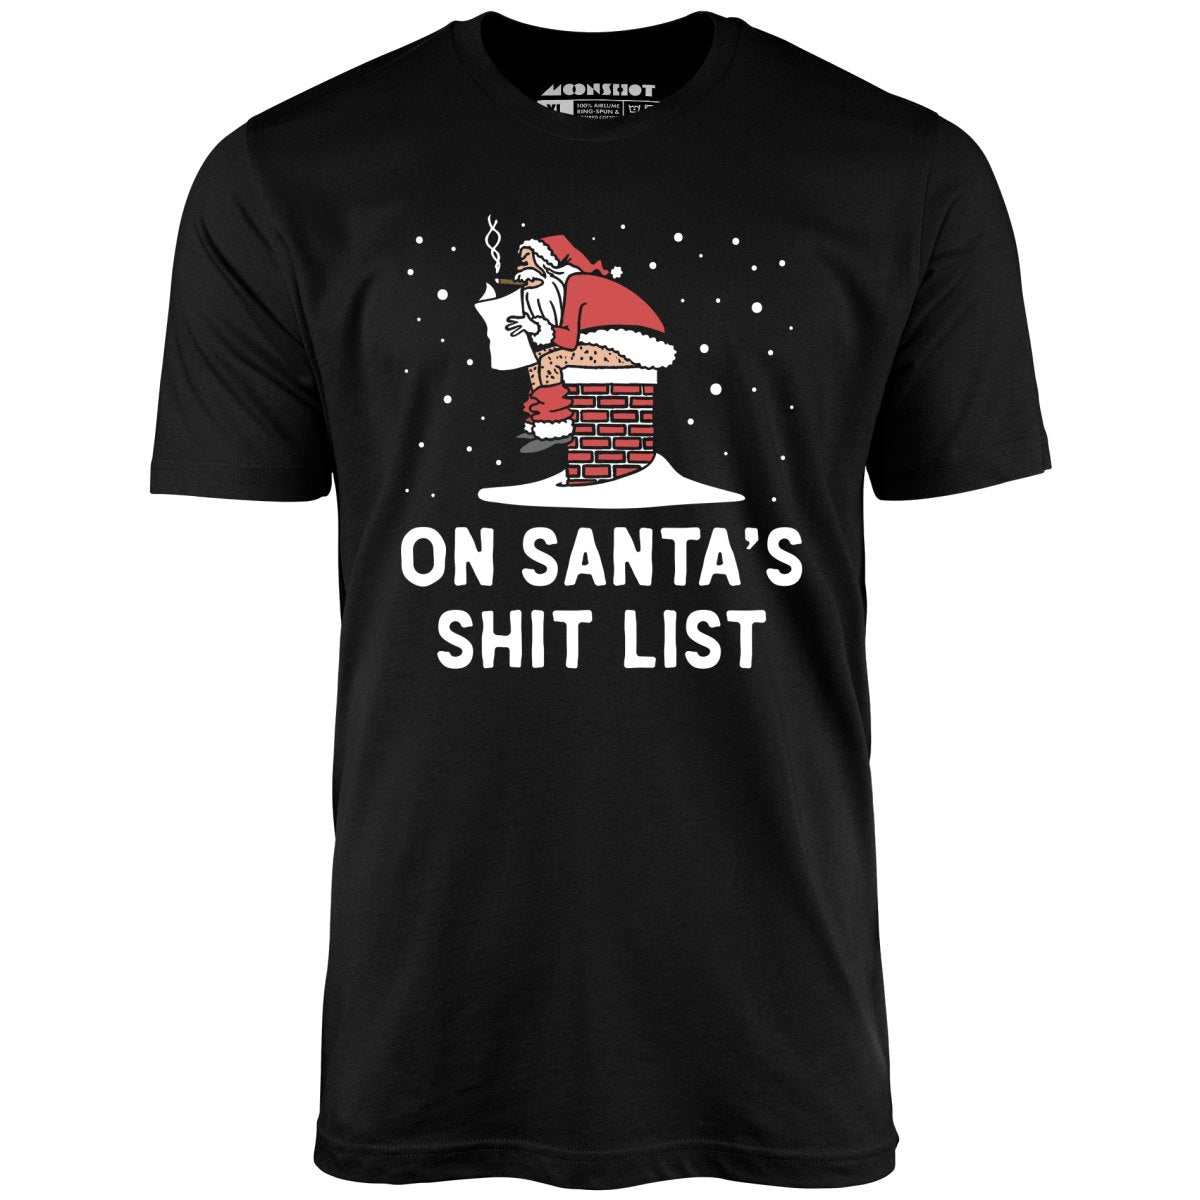 On Santa's Shit List - Unisex T-Shirt